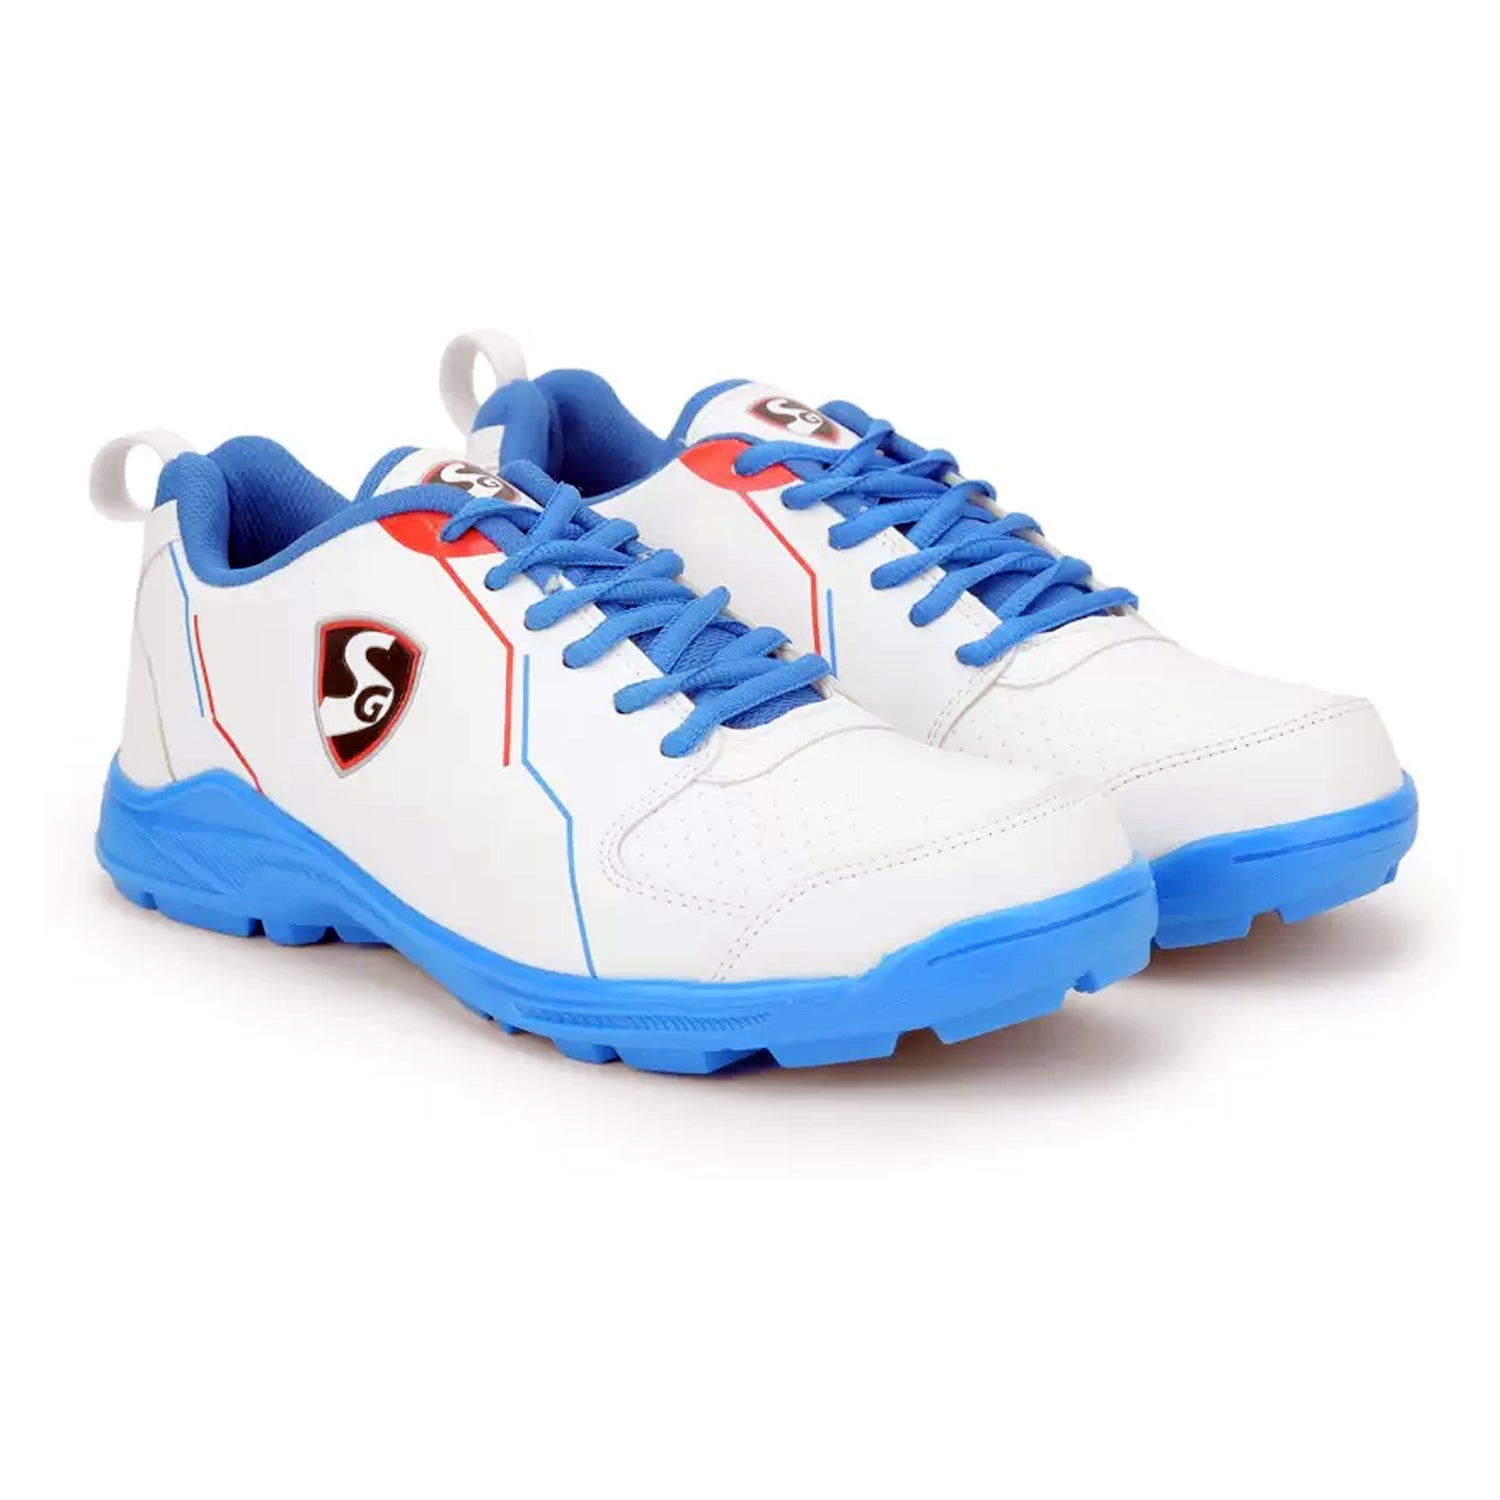 SG Blazelite Cricket Shoes - Best Price online Prokicksports.com